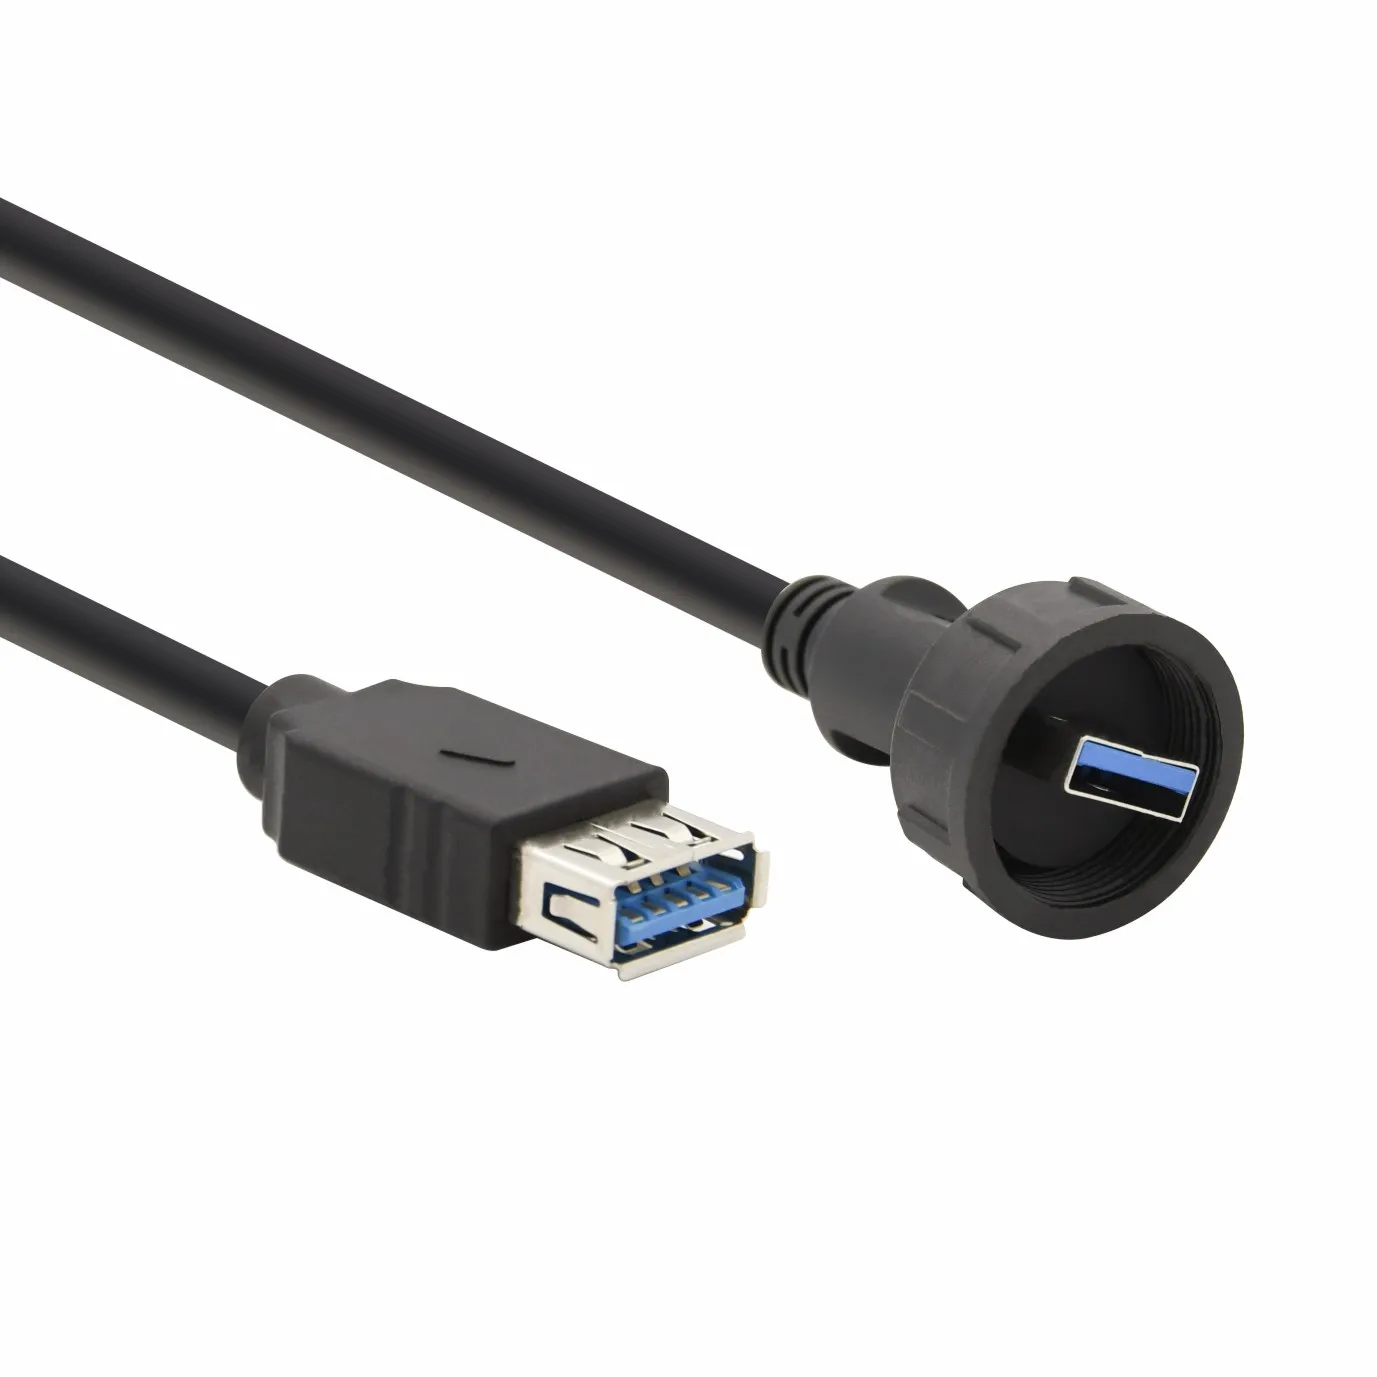 Waterproof usb 2.0 3.0 connector type c male female circular plug pcb mini usb cable adapter